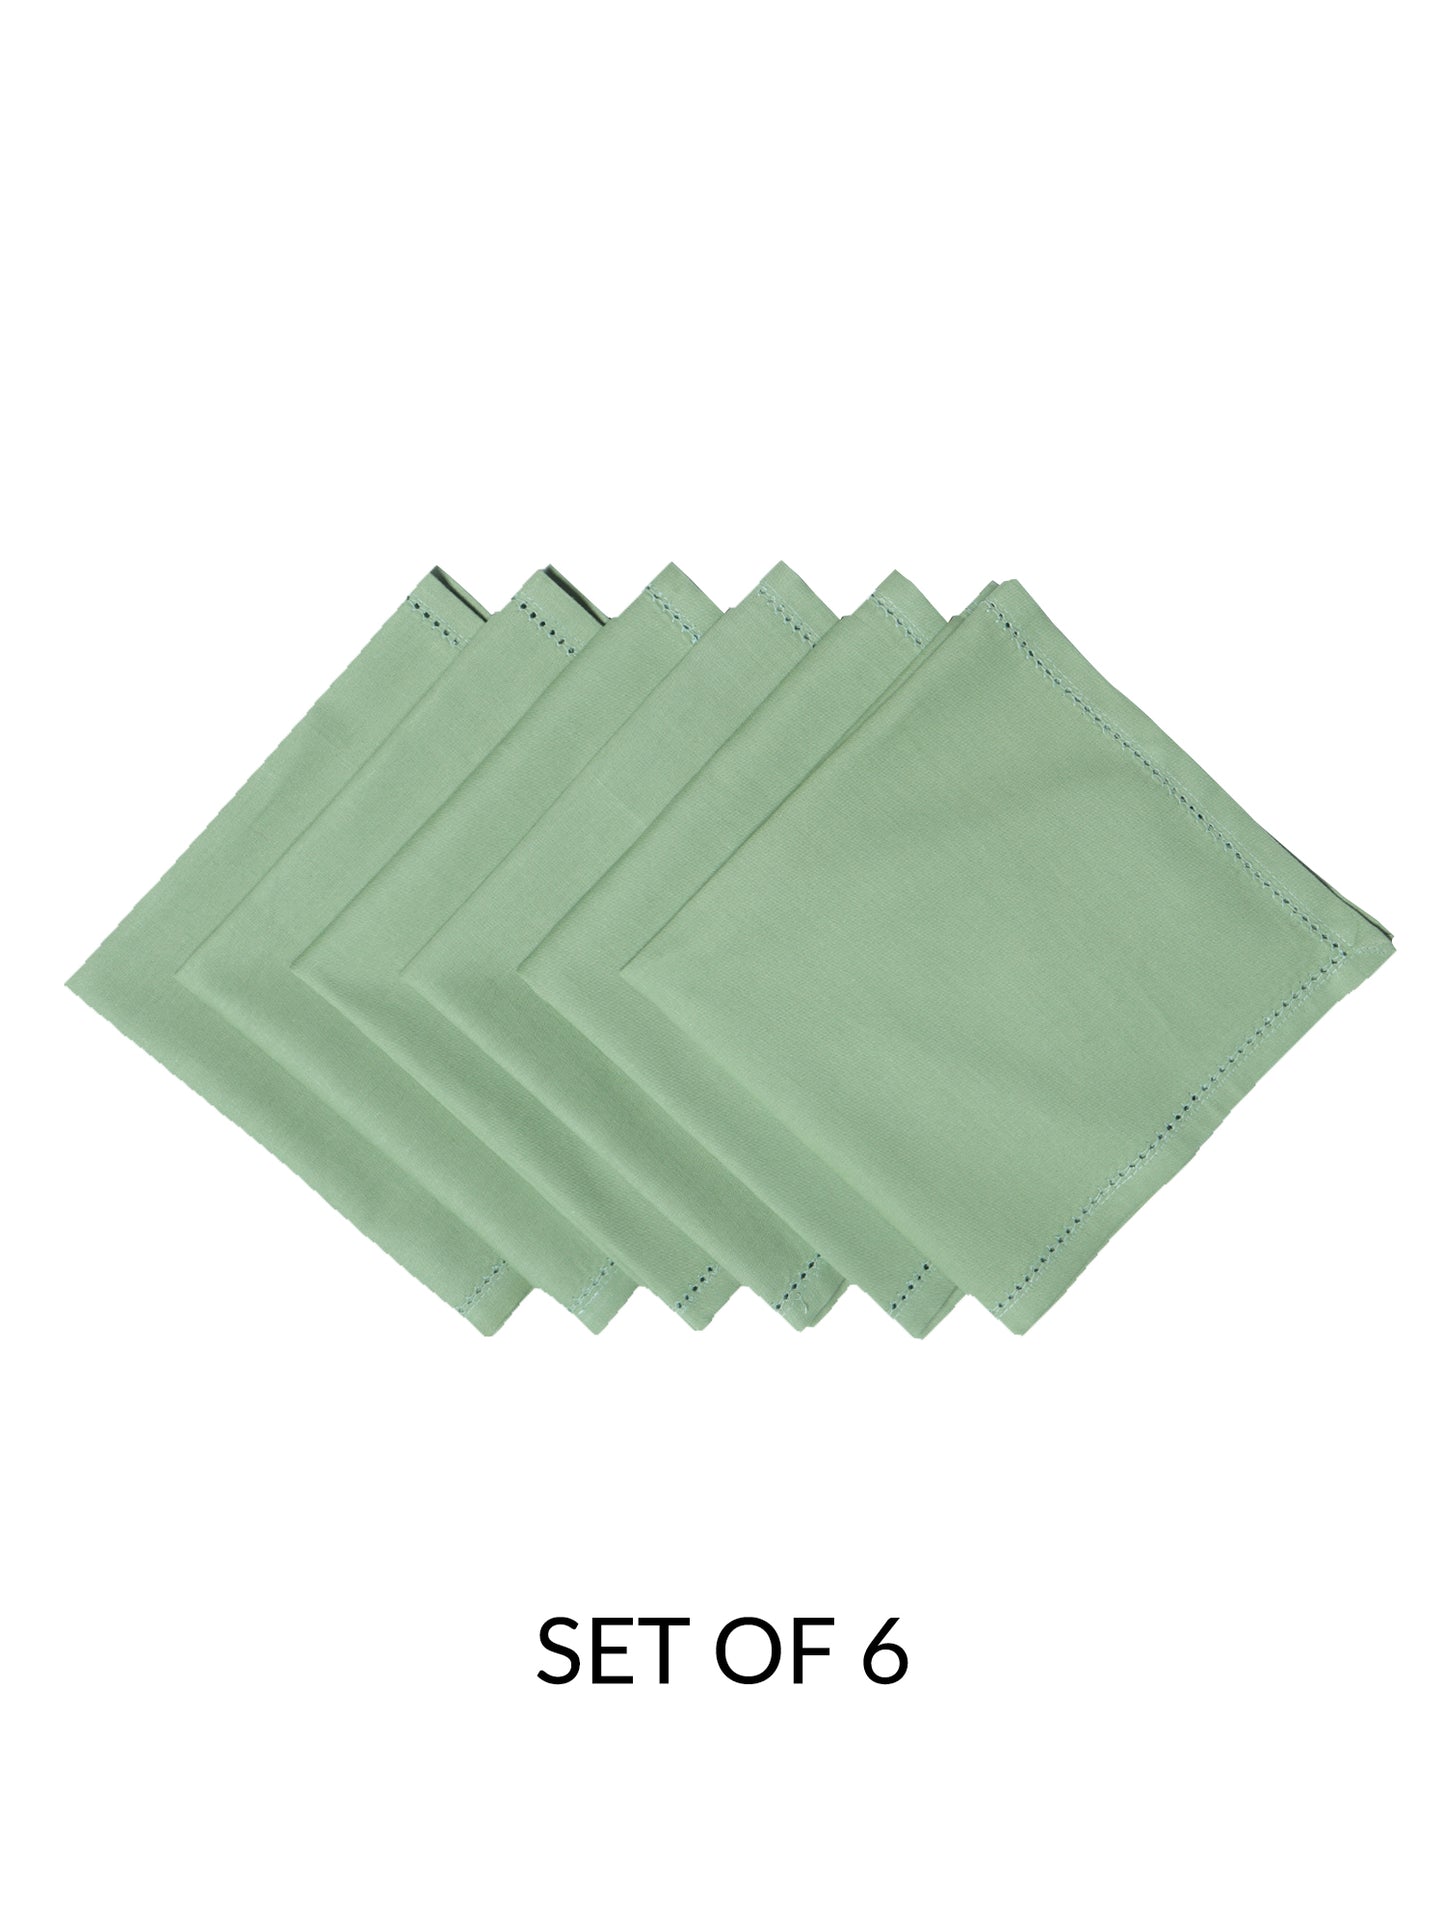 fagotting embroidered set of 6 dinner napkins in olive green color - 16x16 inch